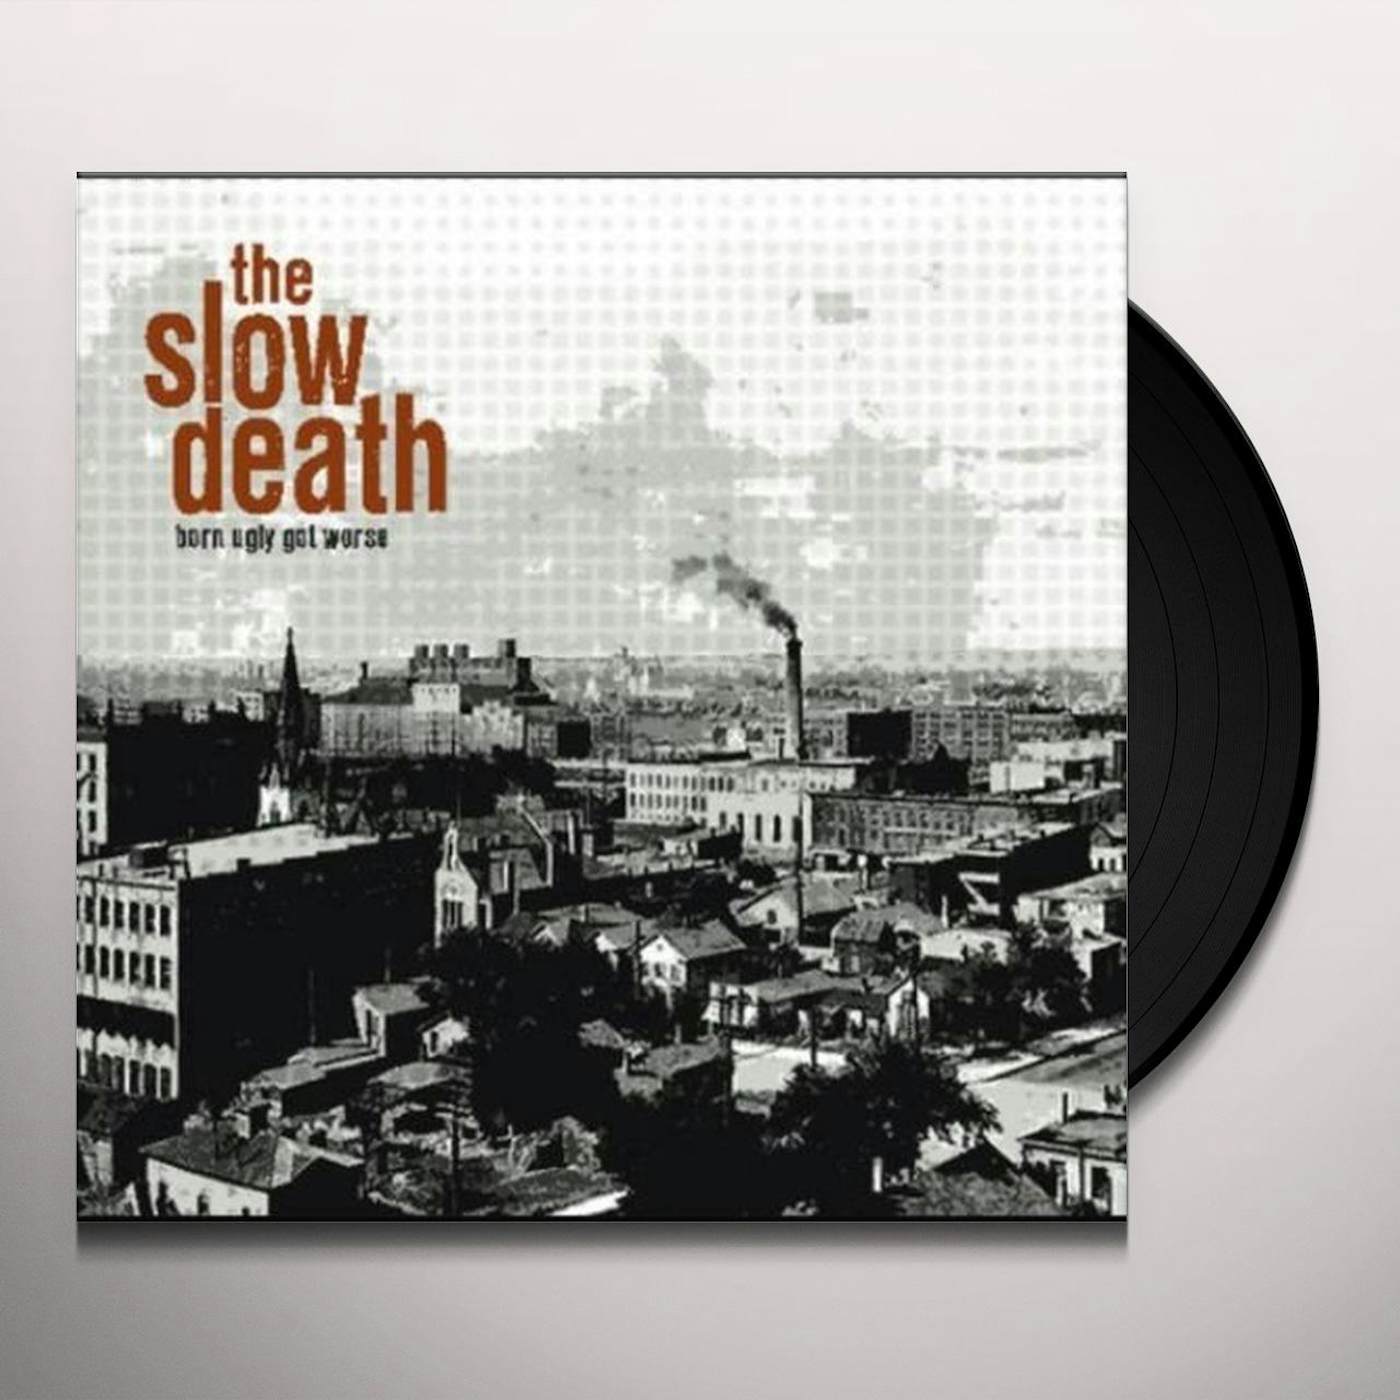 The Slow Death Born Ugly Got Worse Vinyl Record